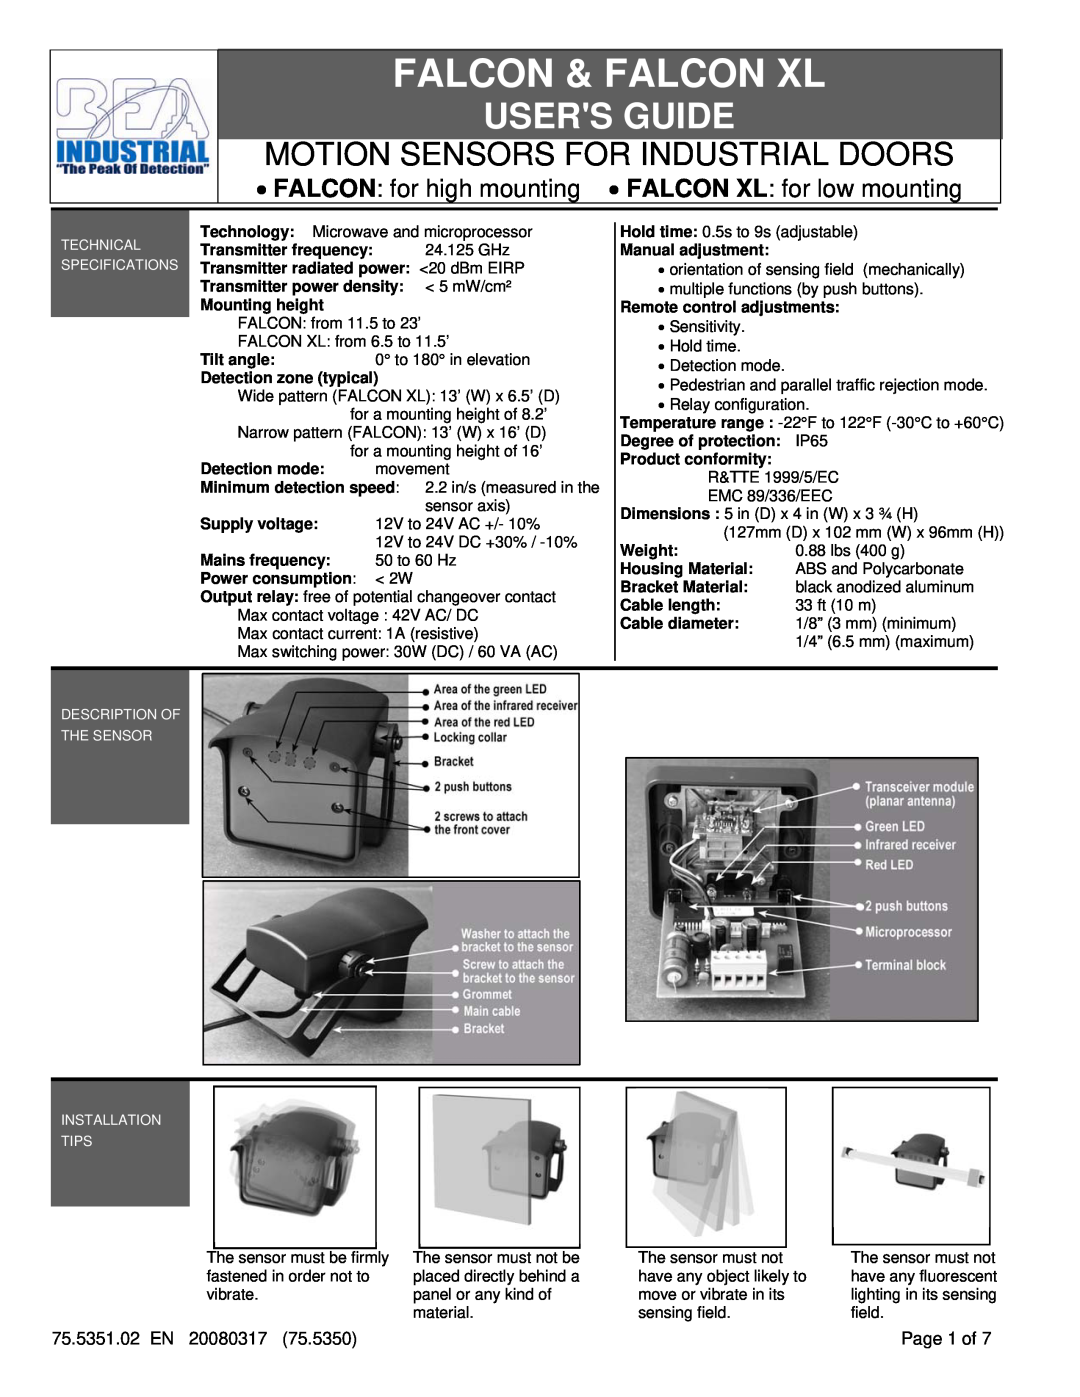 BEA FALCON XL dimensions Falcon & Falcon Xl, Users Guide, Motion Sensors For Industrial Doors 